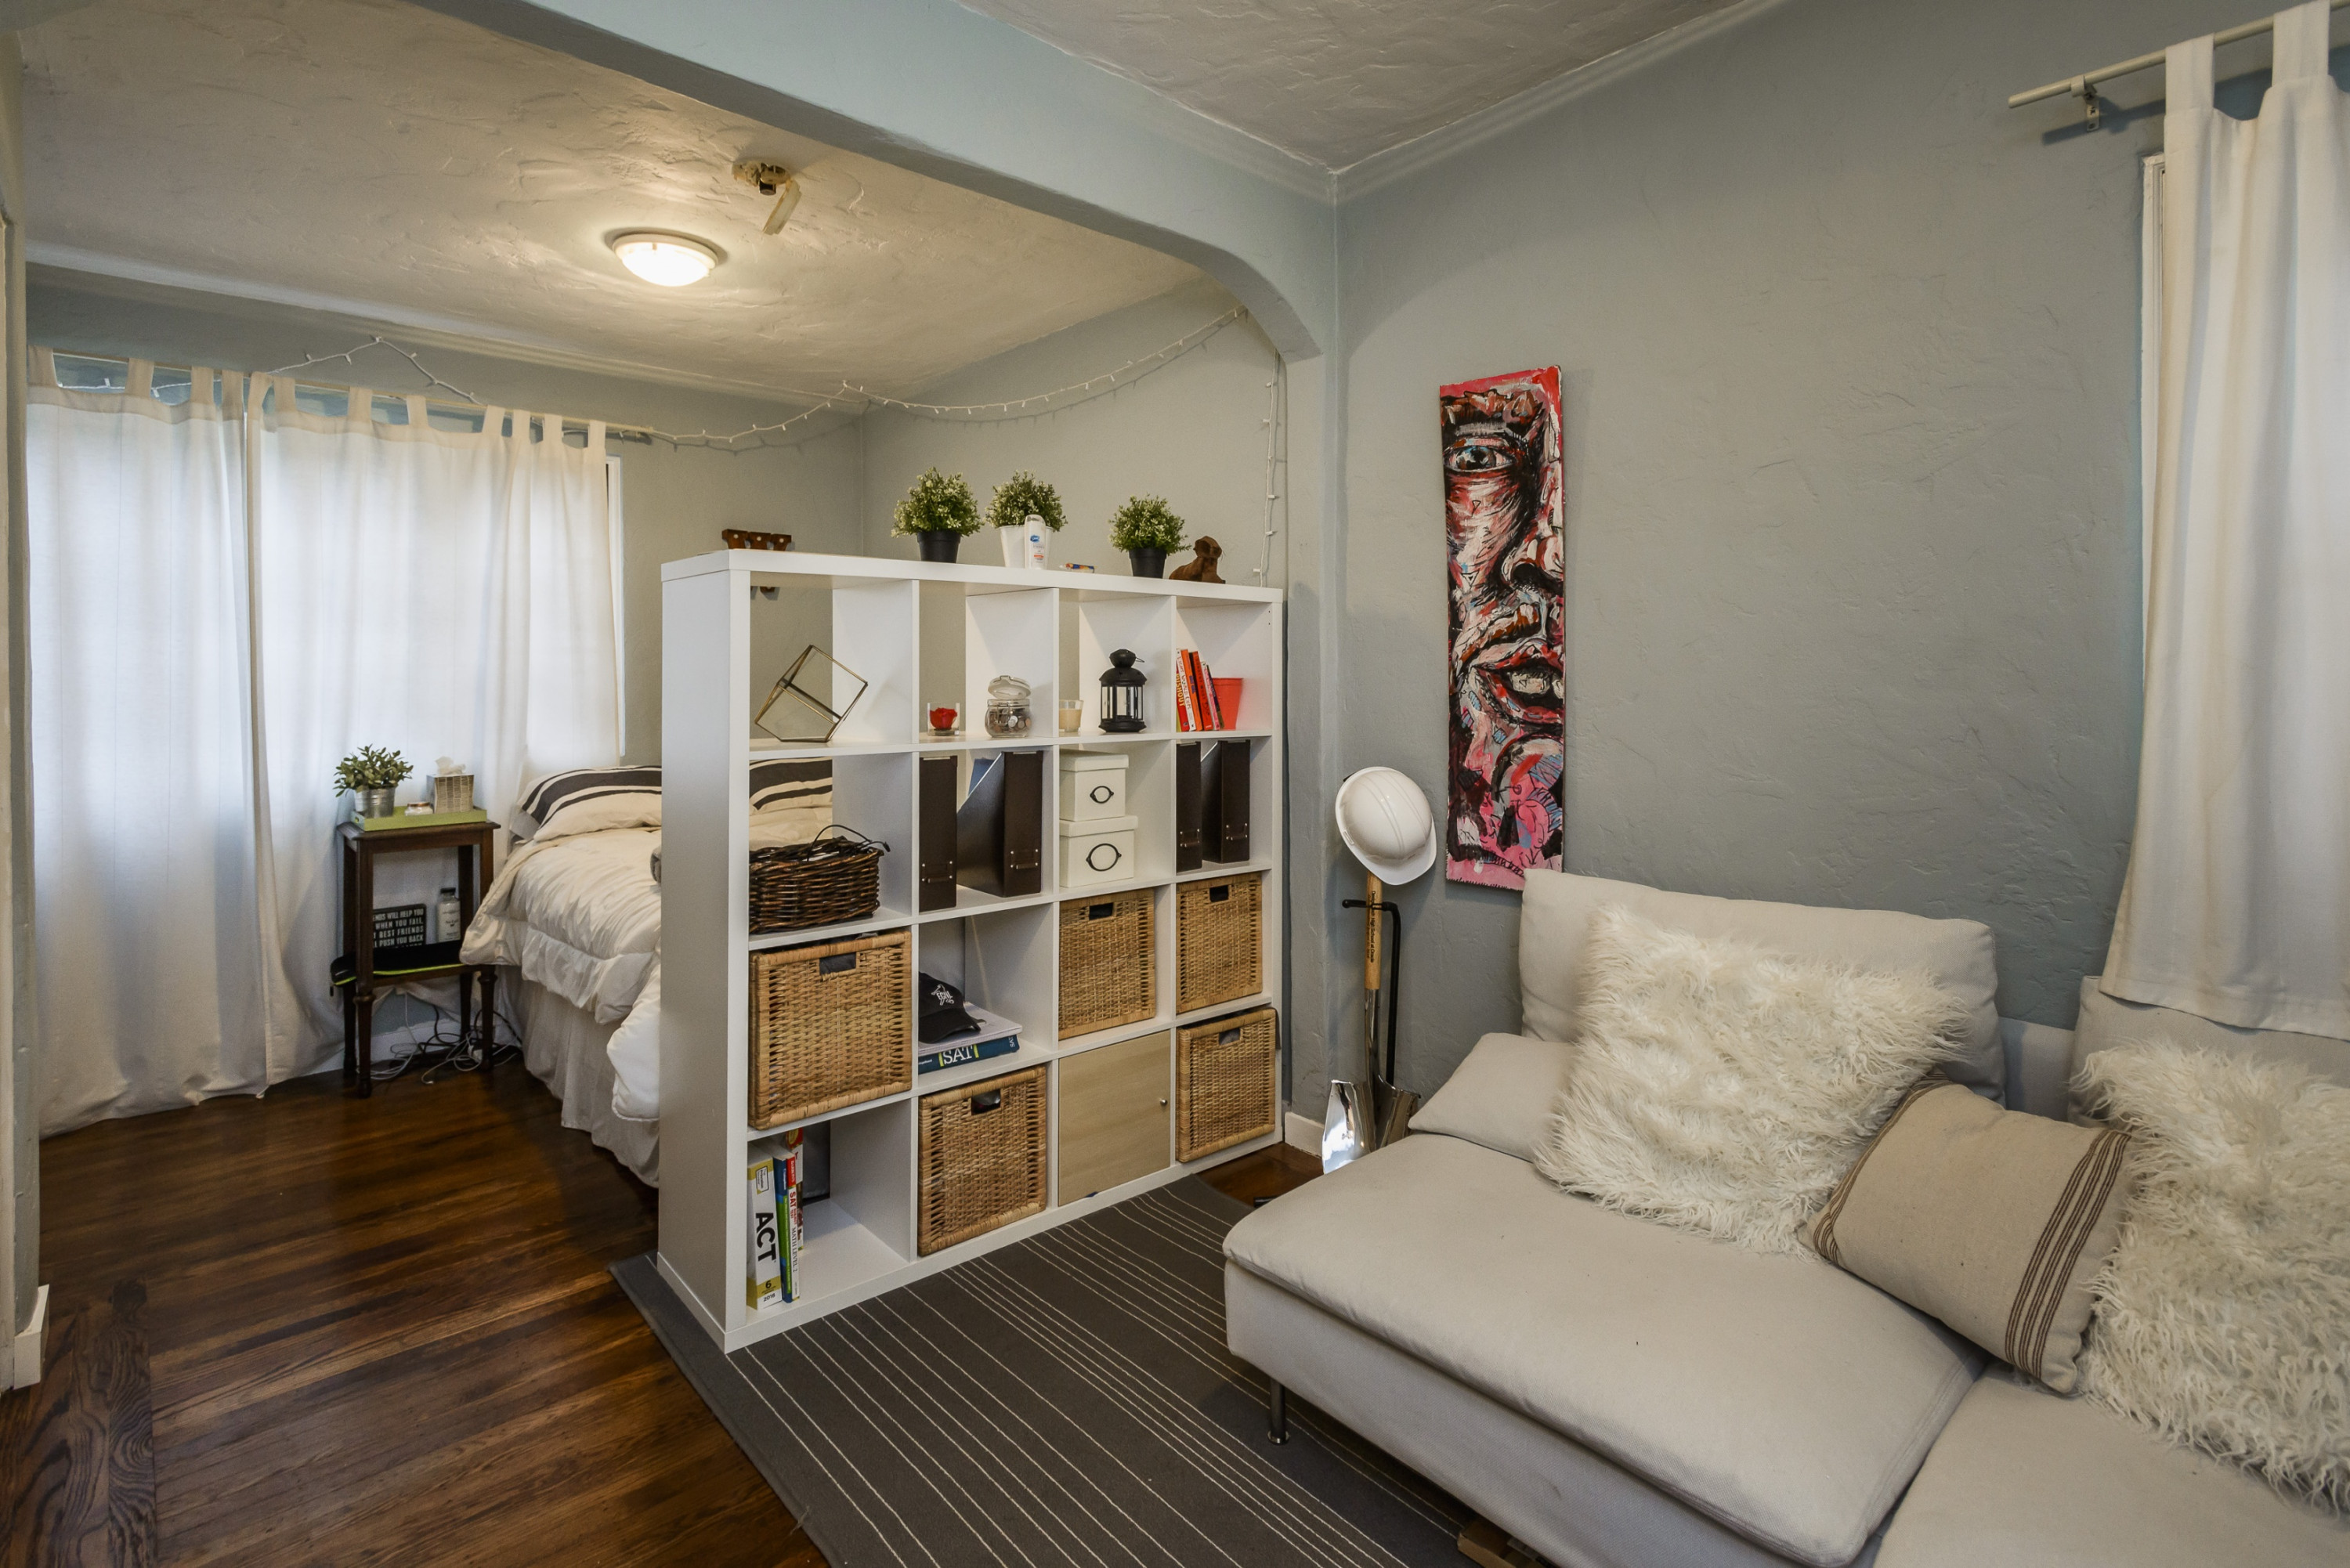 1601 Easton Drive Bedroom Cabinet Divider in Easton Addition Neighborhood in Burlingame.